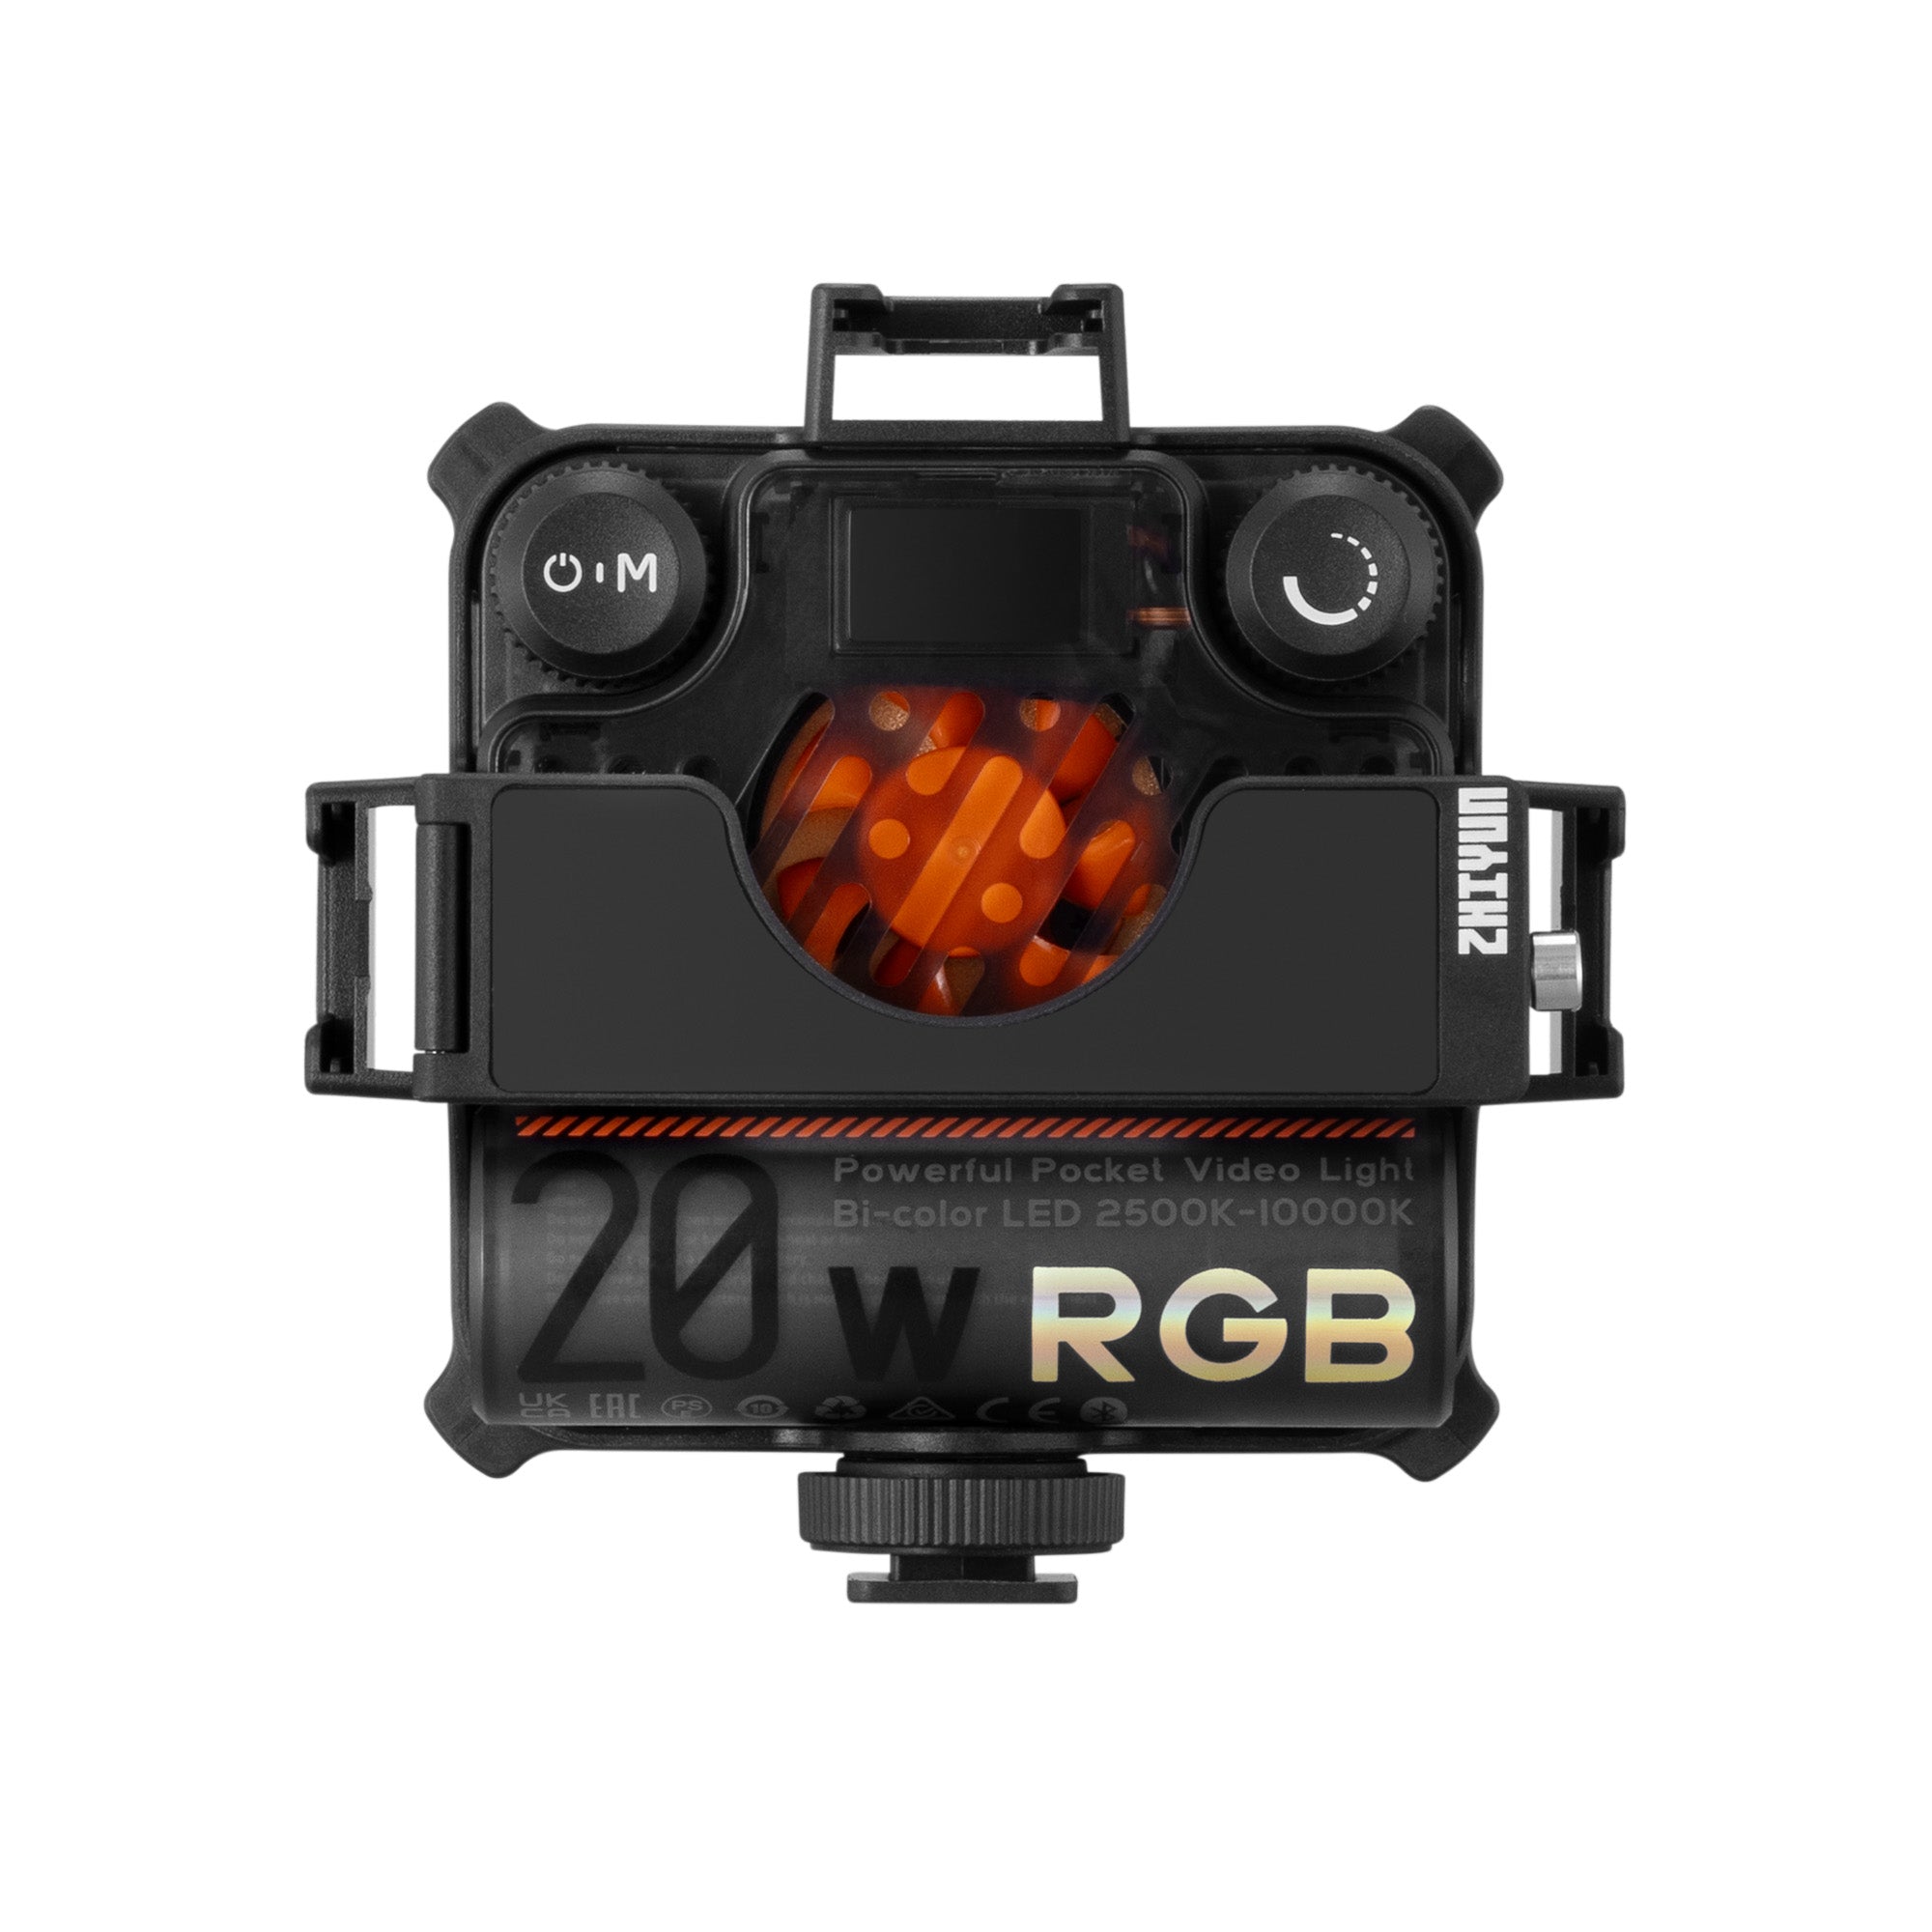 ZHIYUN FIVERAY M20C RGB Video Light 20W Portable Camera Light Support App Control